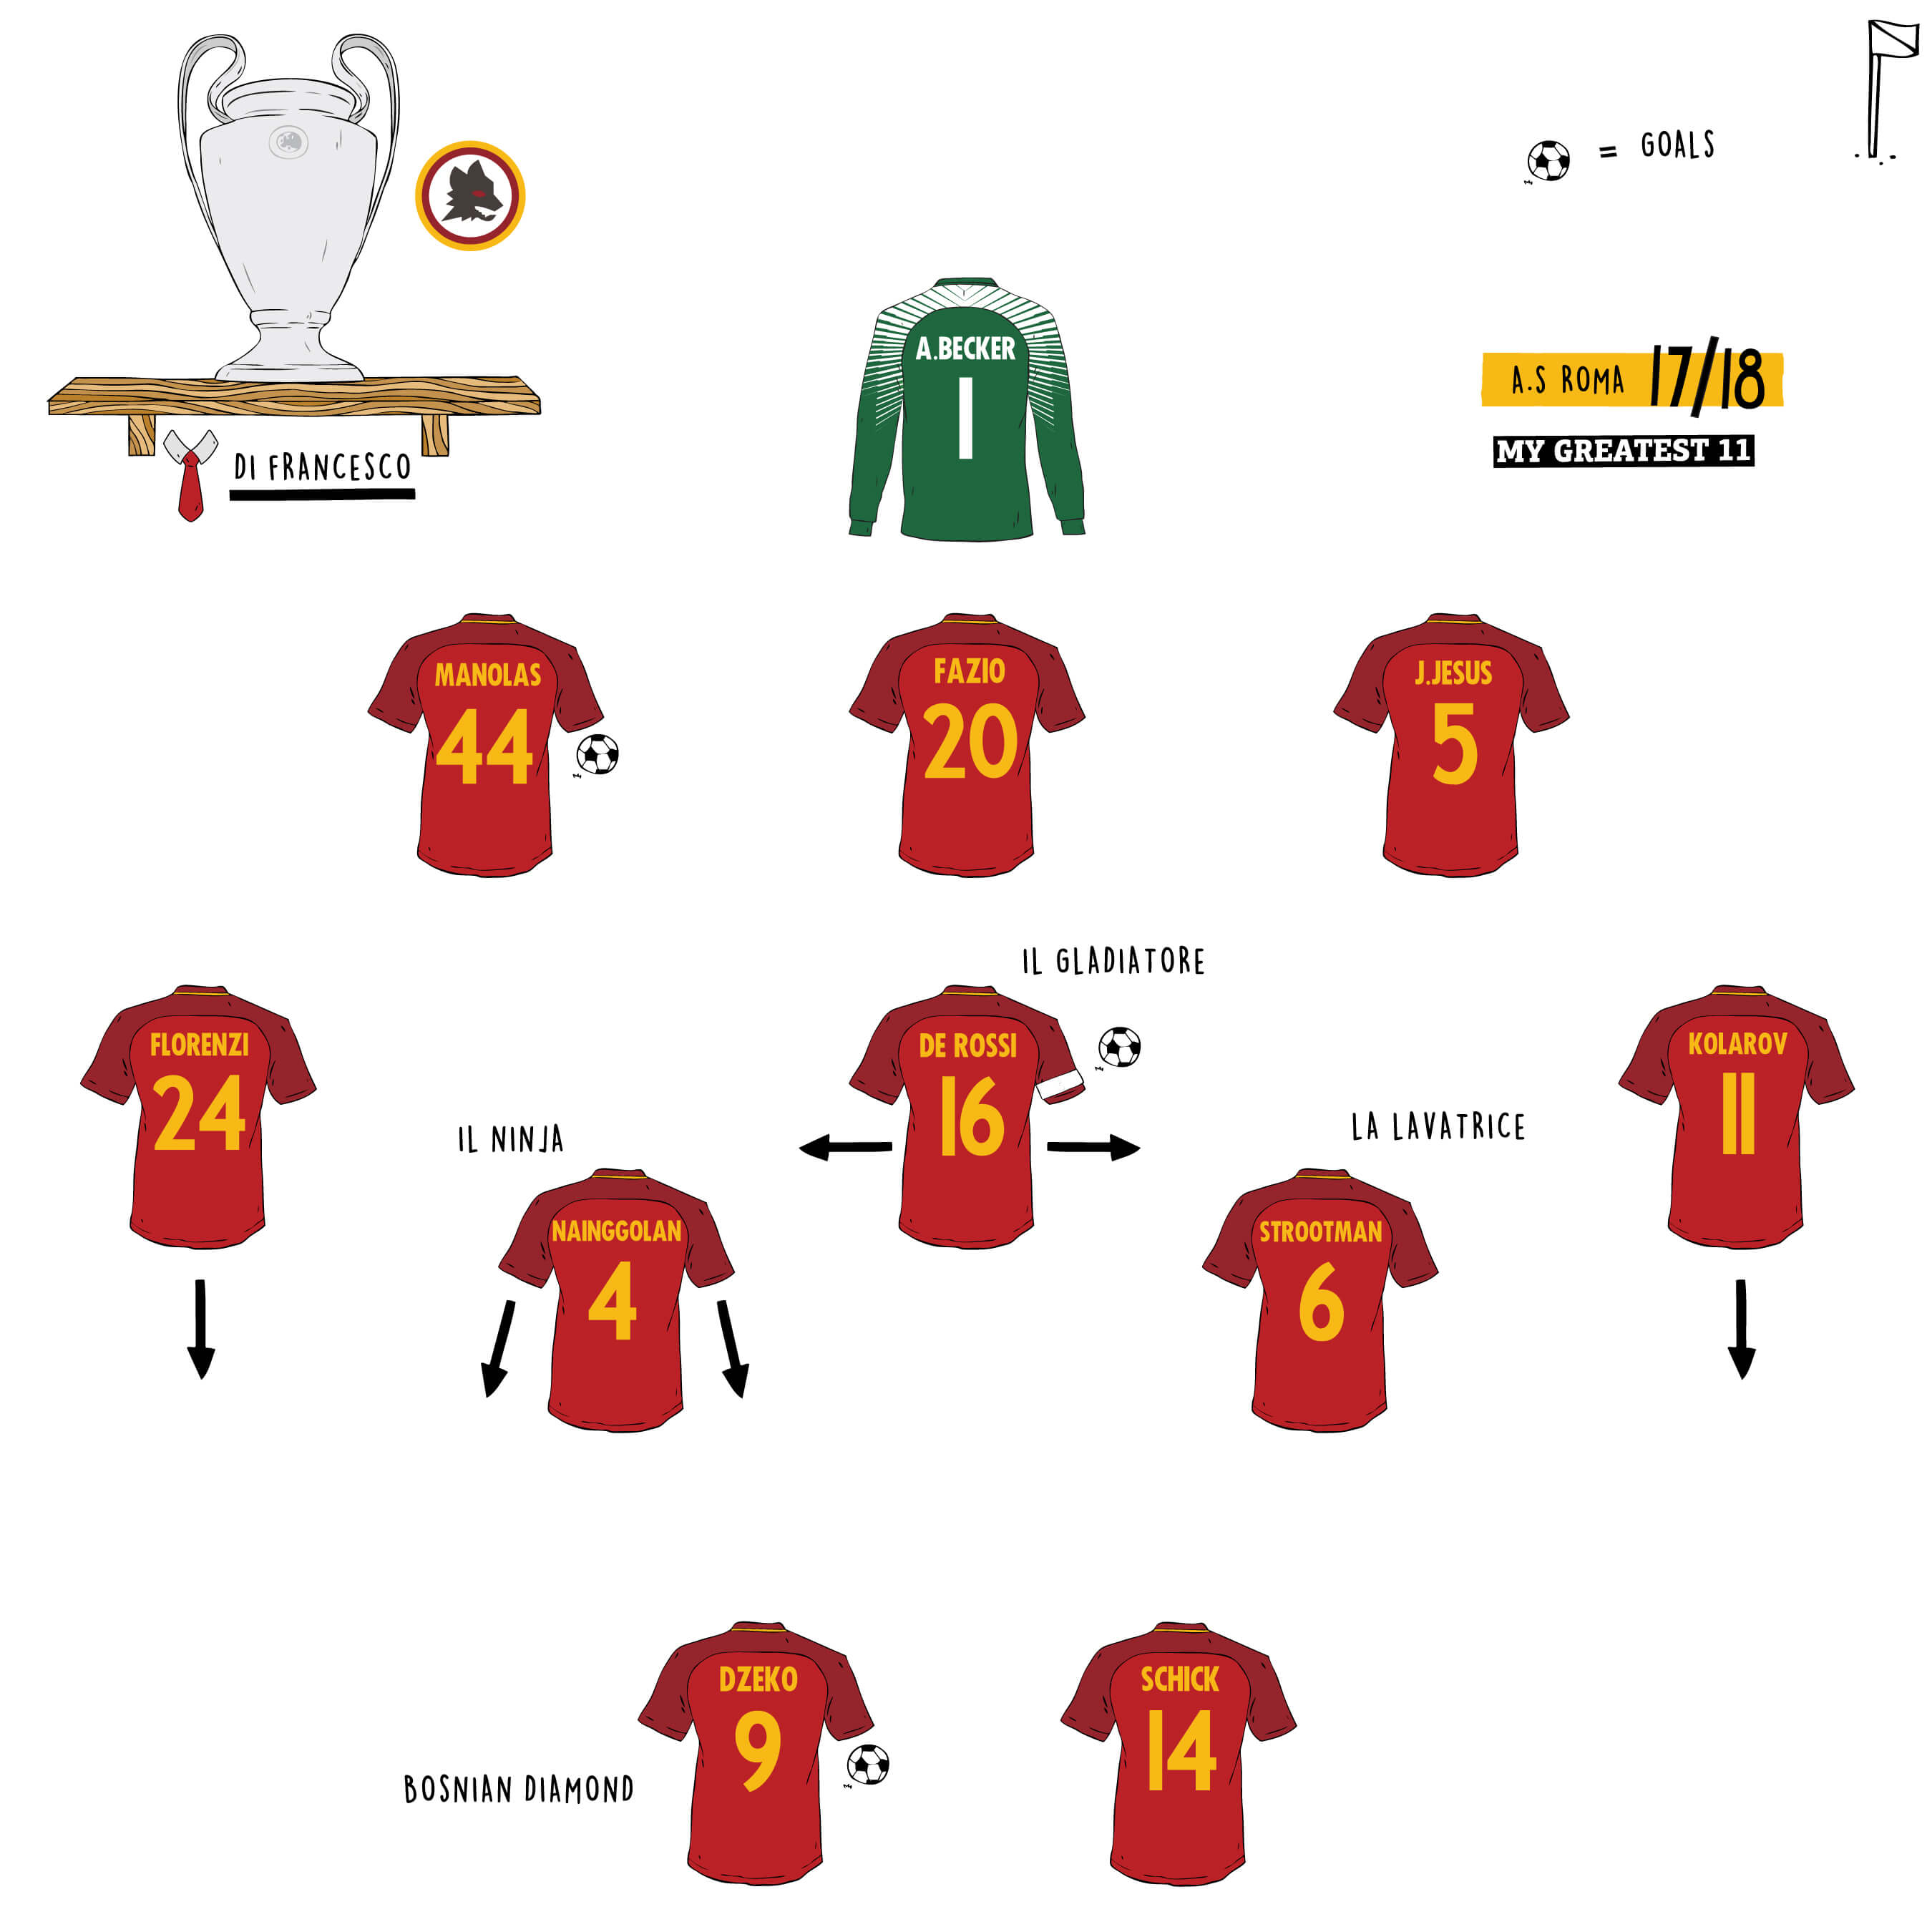 Roma 3-0 Barcelona (aggregate 4-4, Roma win on away goals), 2004